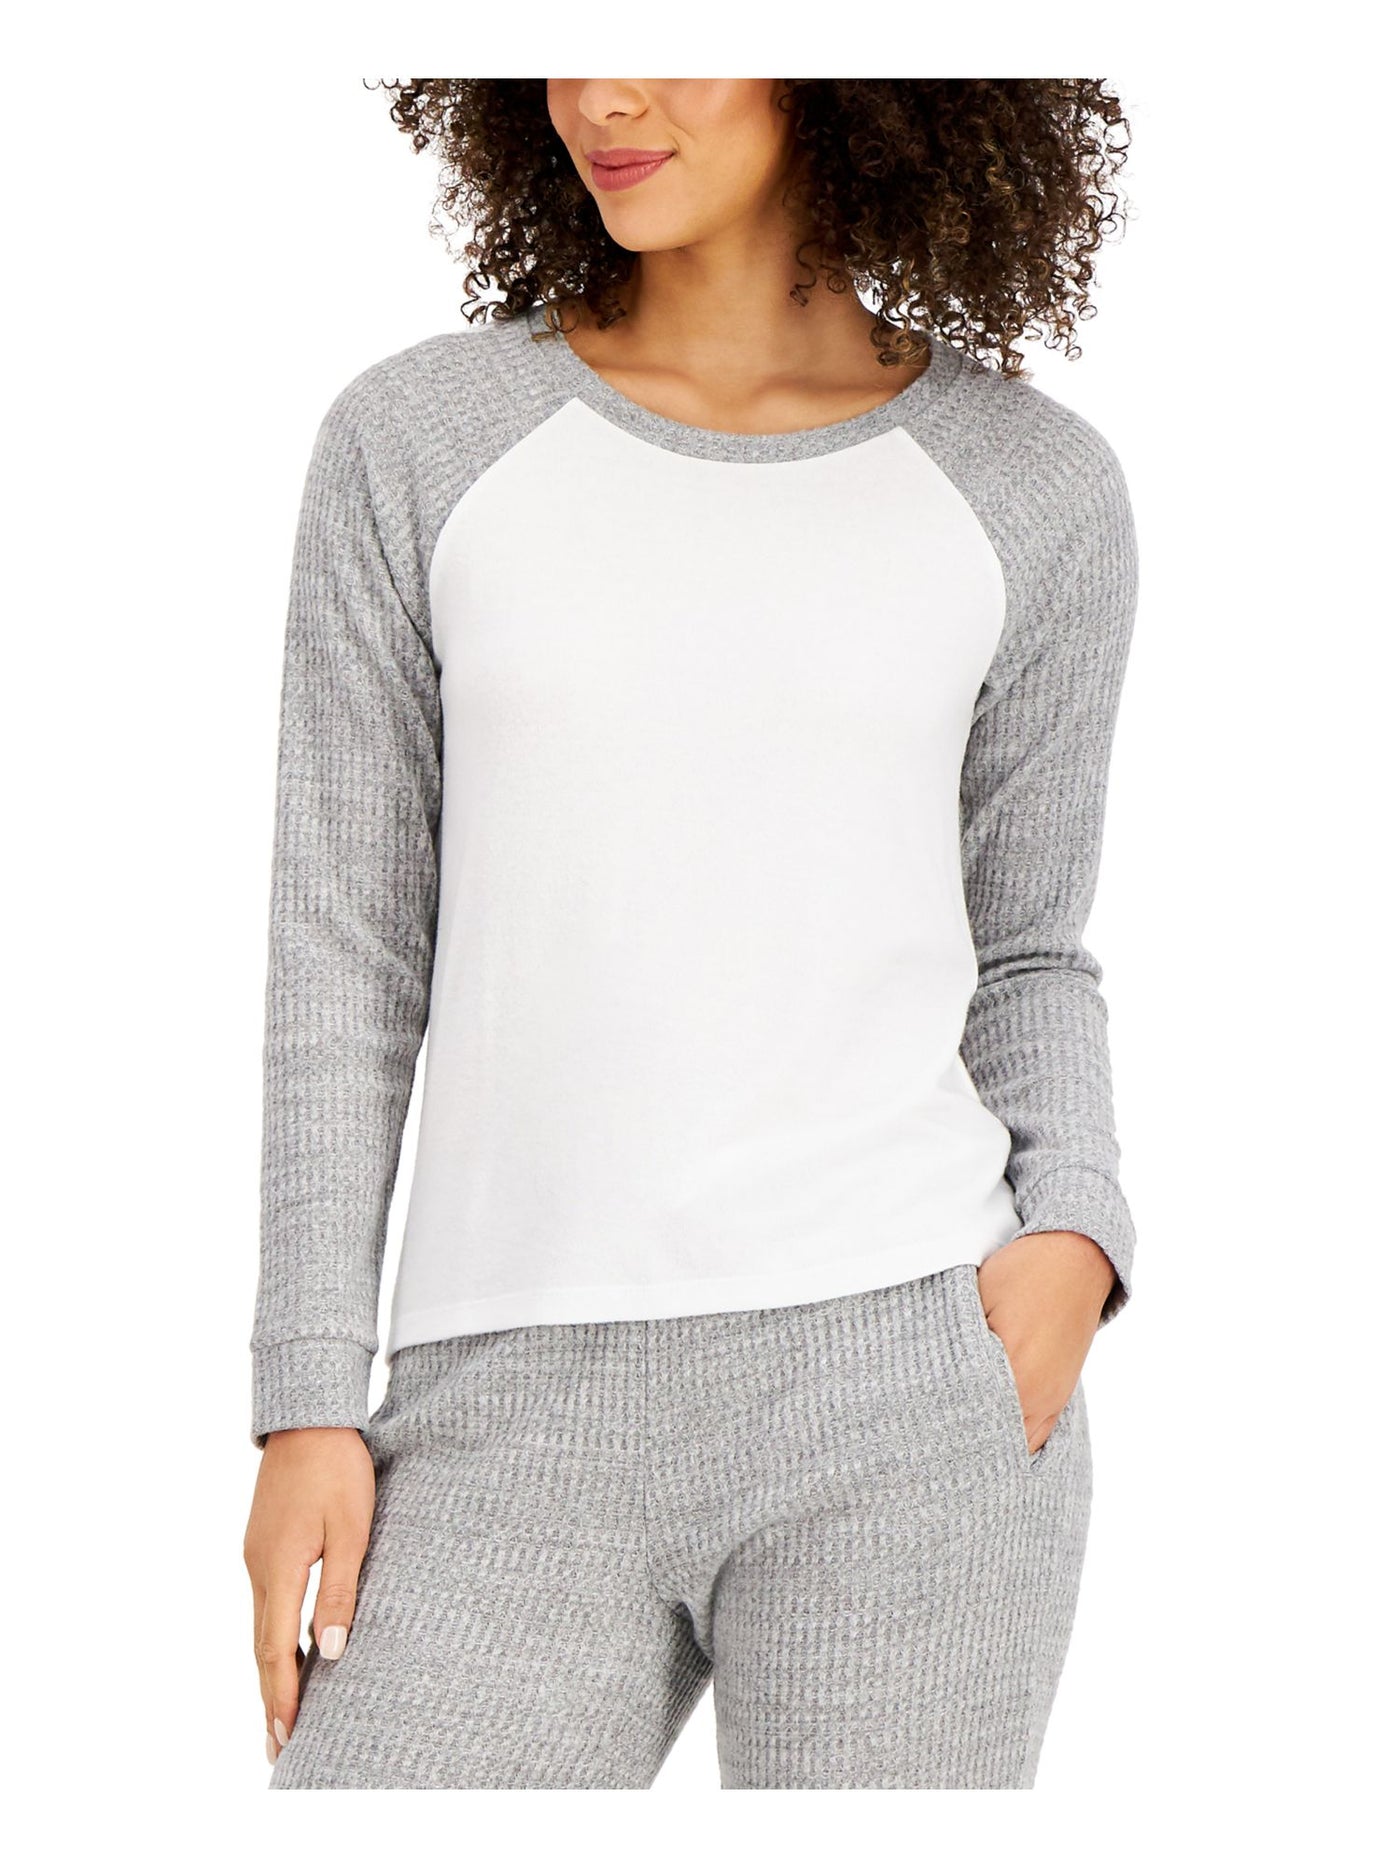 ALFANI Intimates Gray Sleep Shirt Pajama Top S